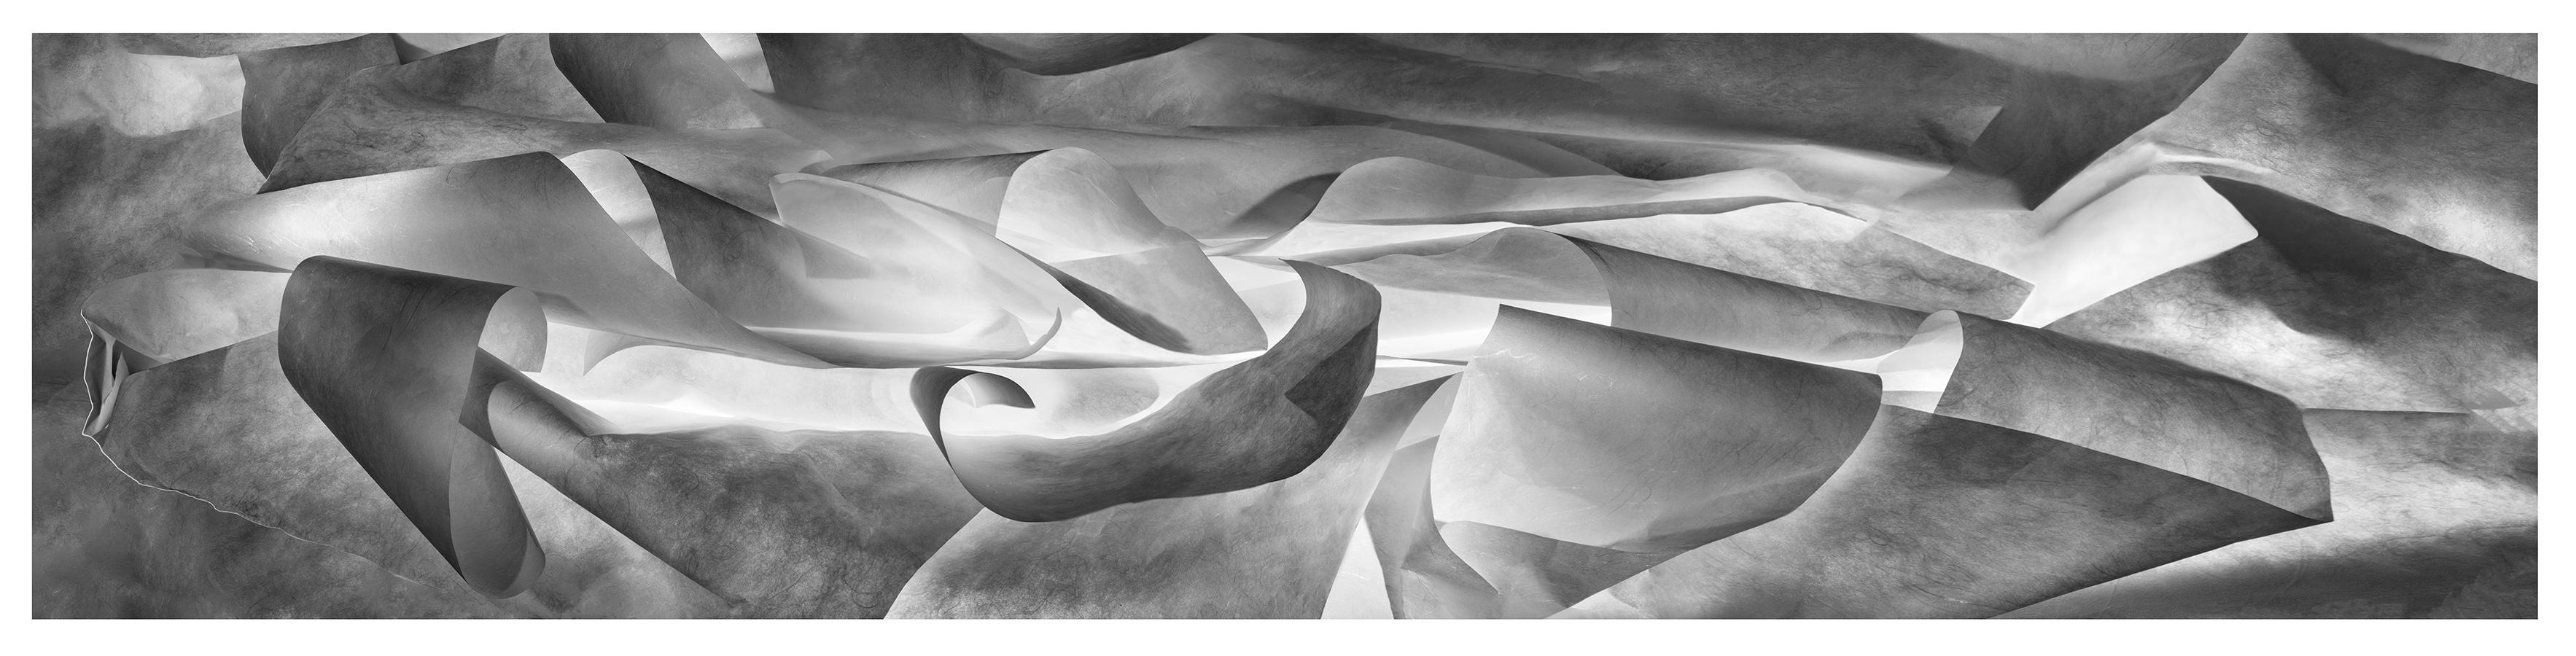 John Dean Abstract Photograph - 'Undercurrents (11/14/2021)' - abstract photography - black and white photograph